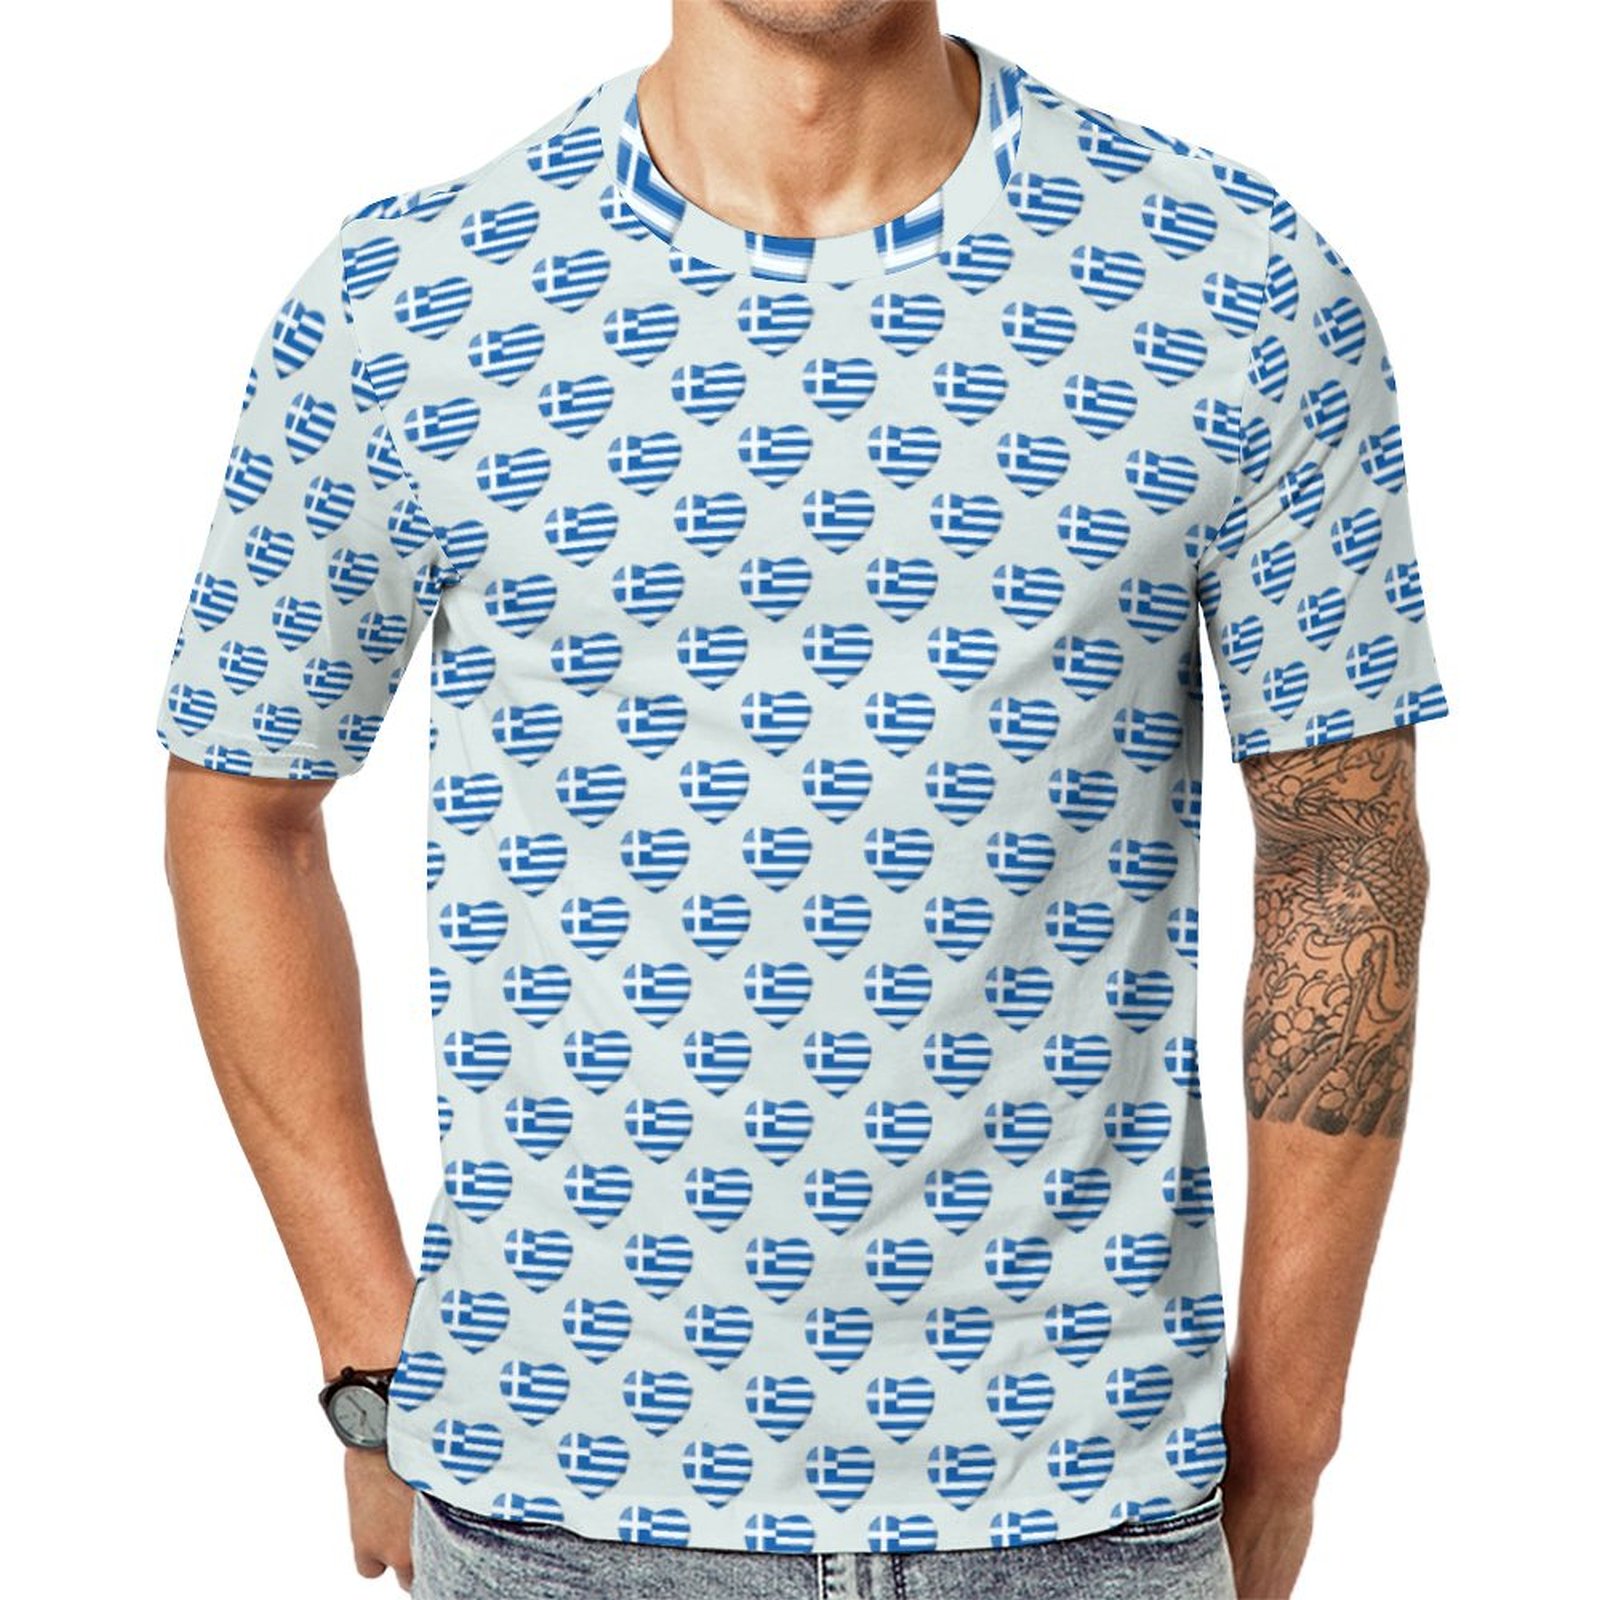 Greek Flag Heart Short Sleeve Print Unisex Tshirt Summer Casual Tees for Men and Women Coolcoshirts